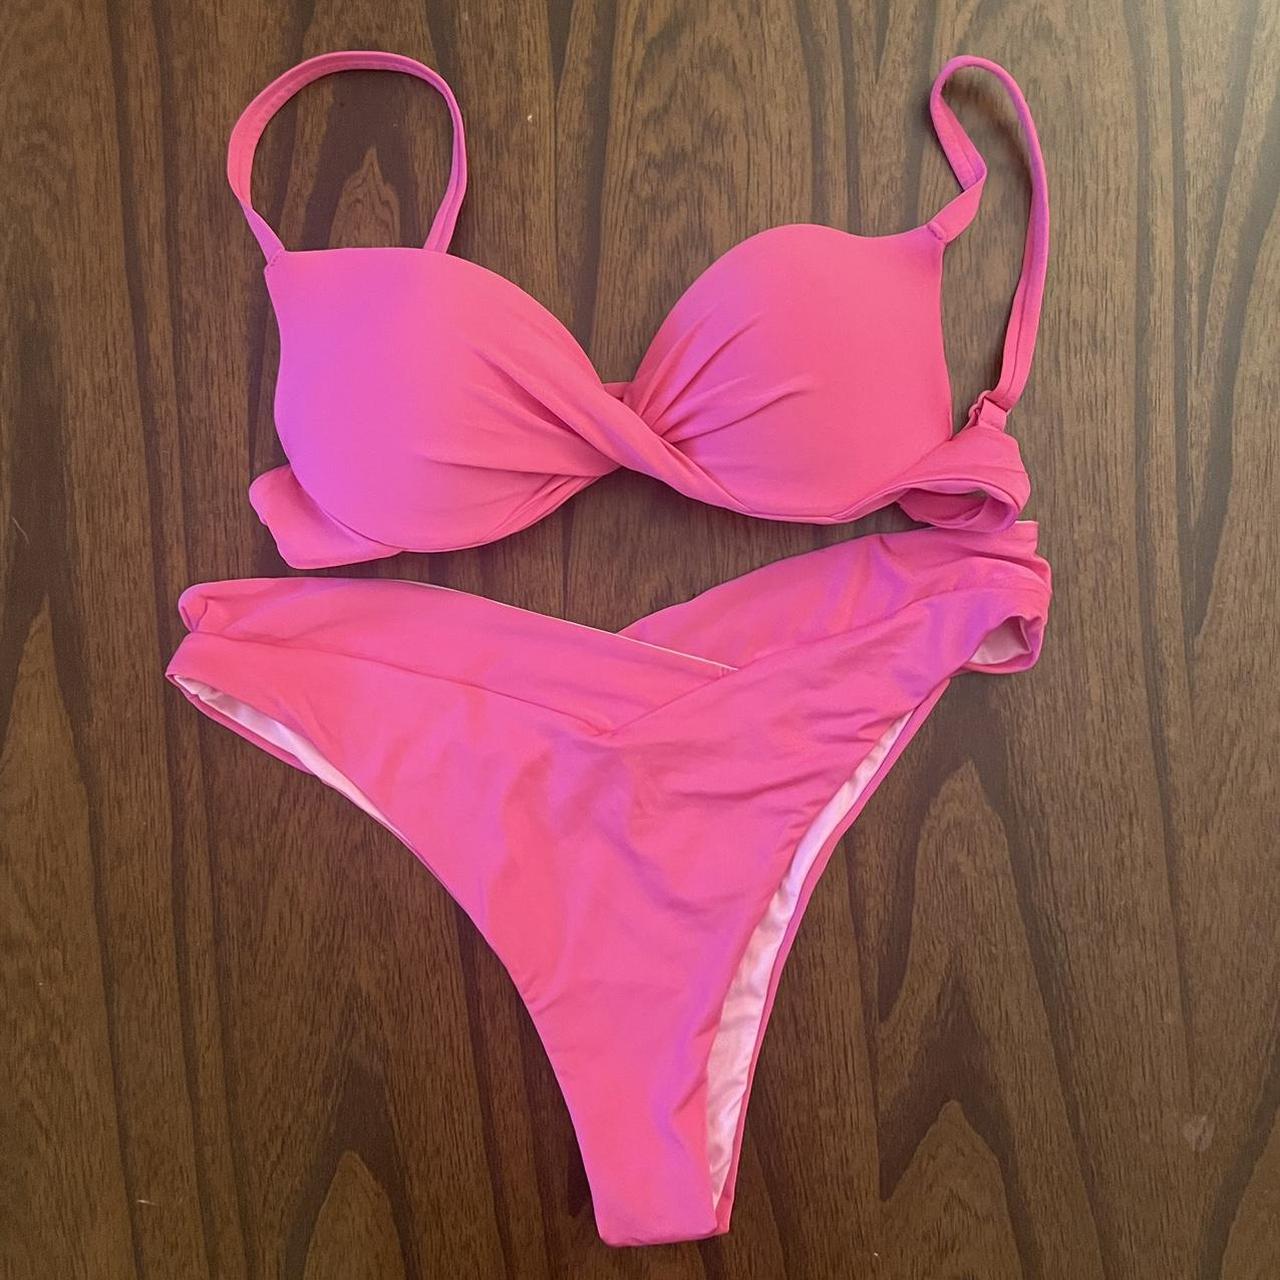 Calzedonia Women's Pink Bikinis-and-tankini-sets